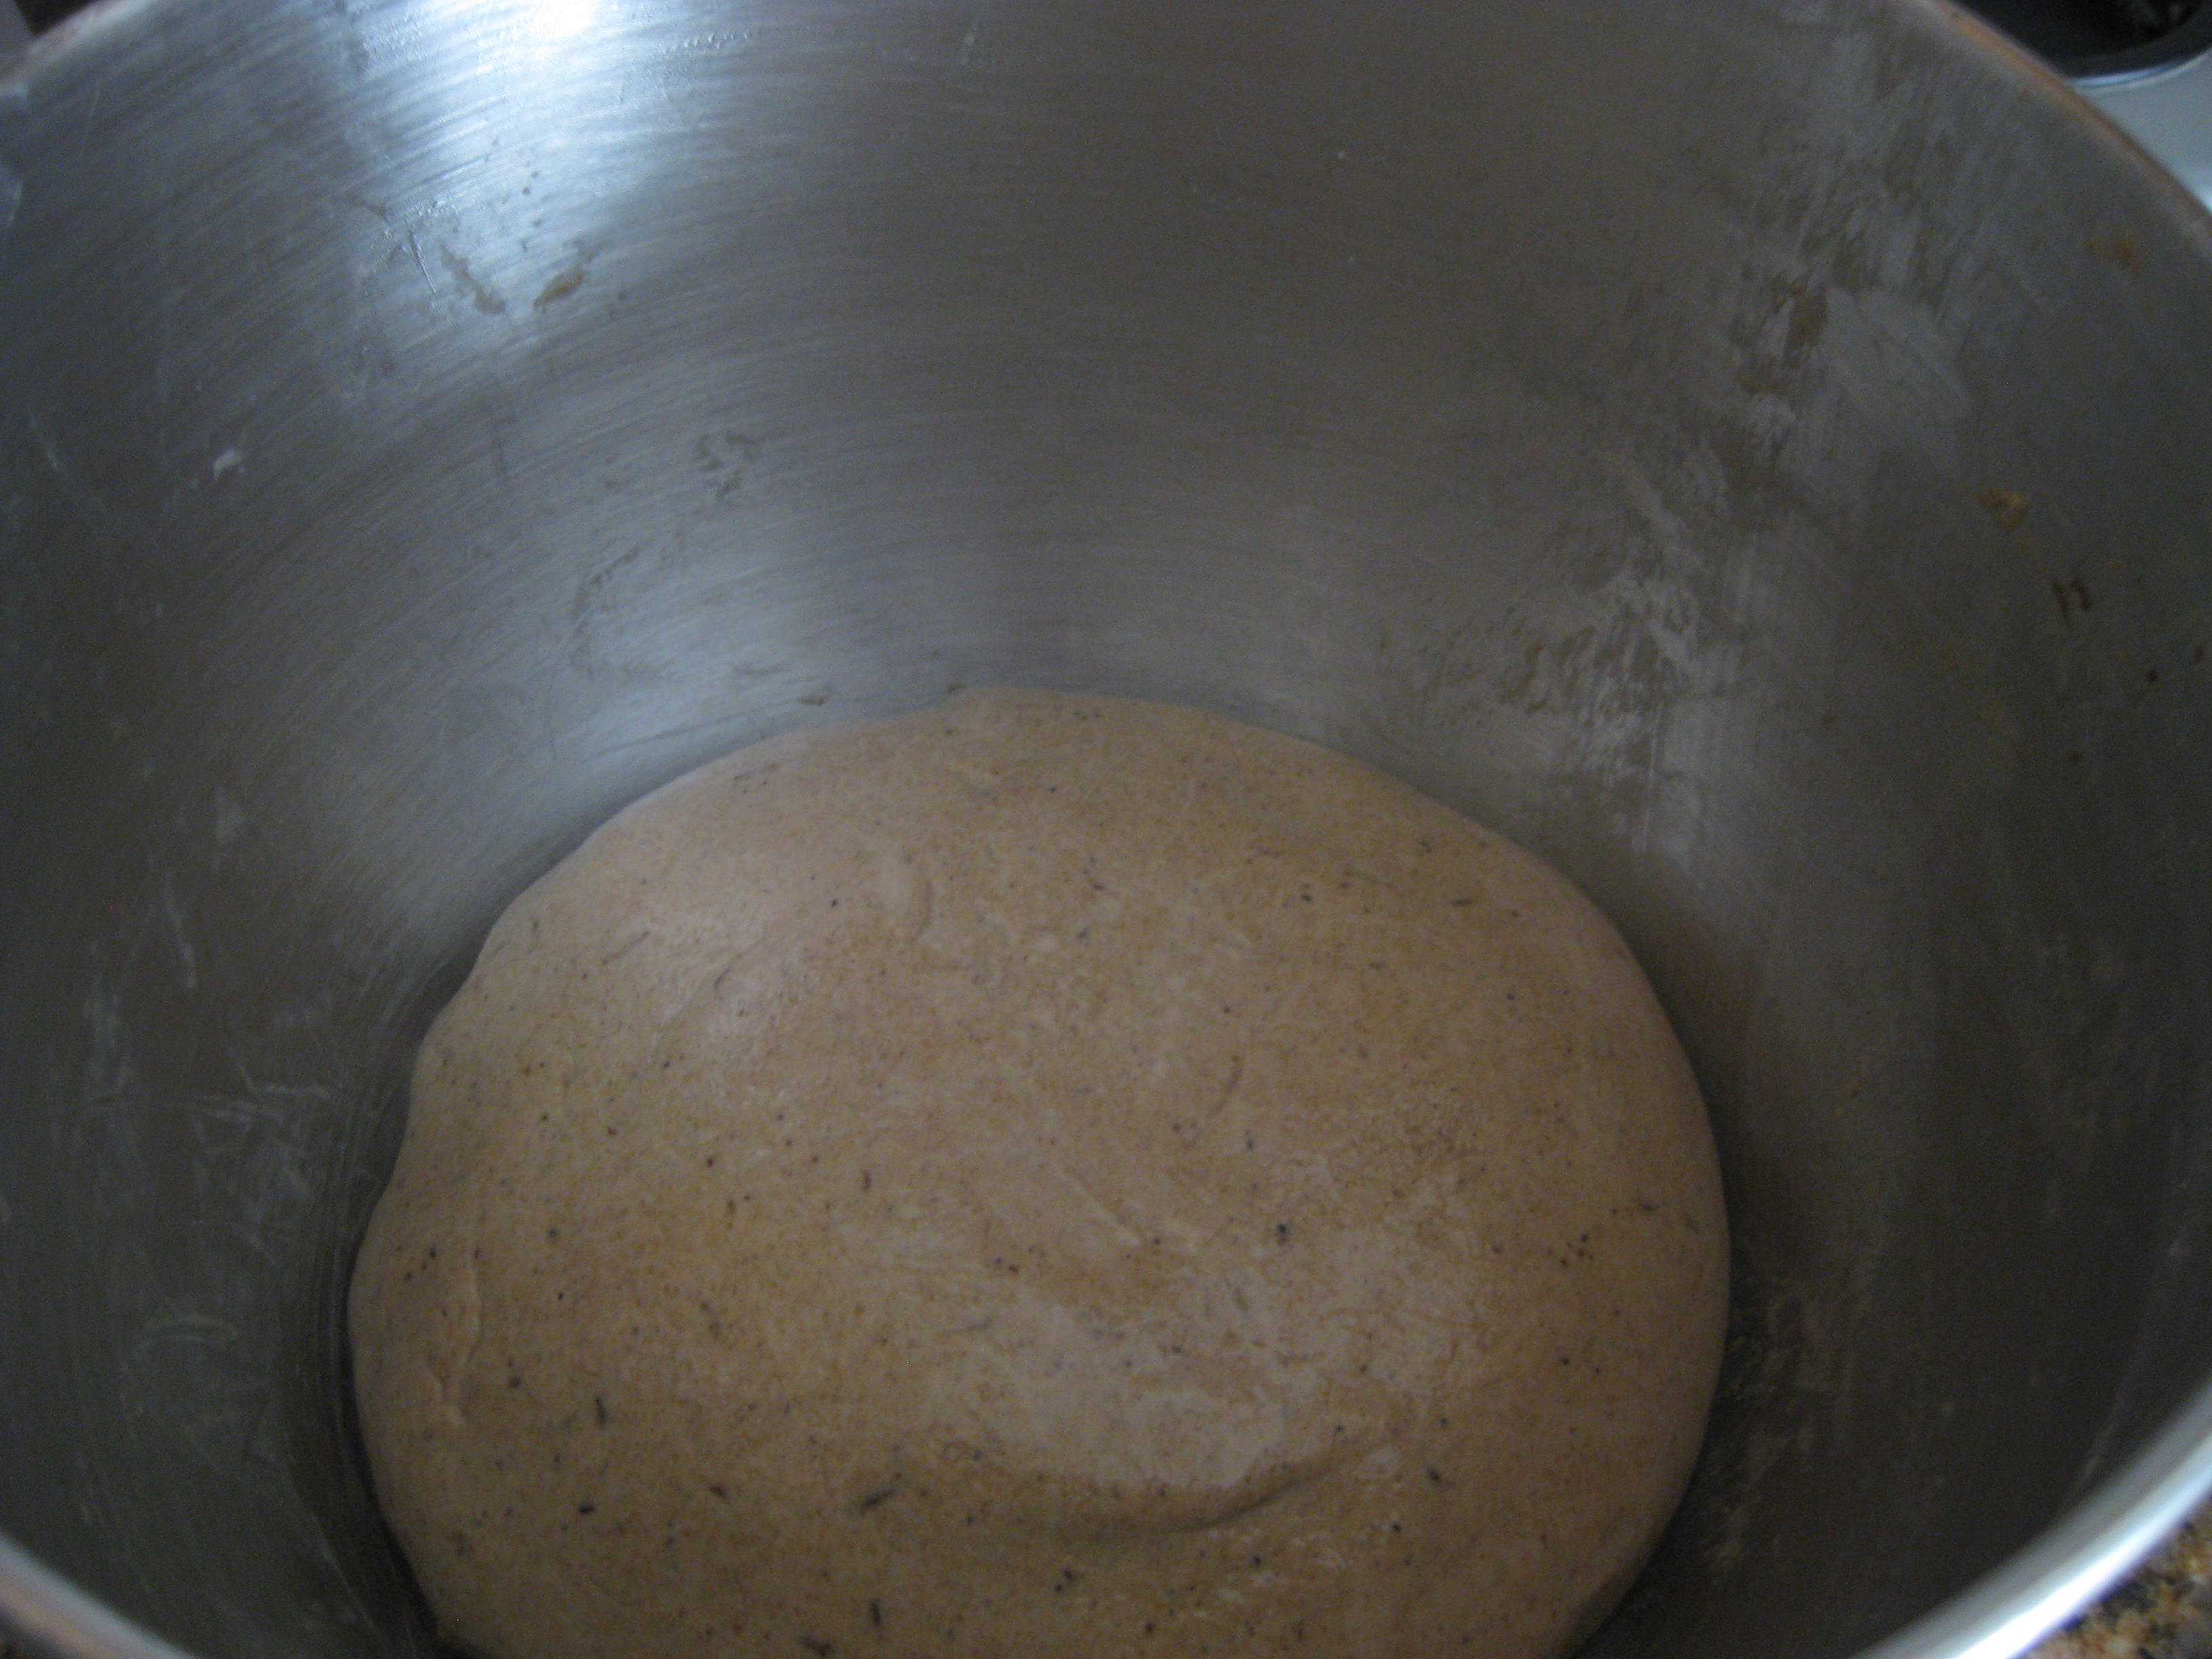 Žitno-pšeničný chléb založený na ruštině